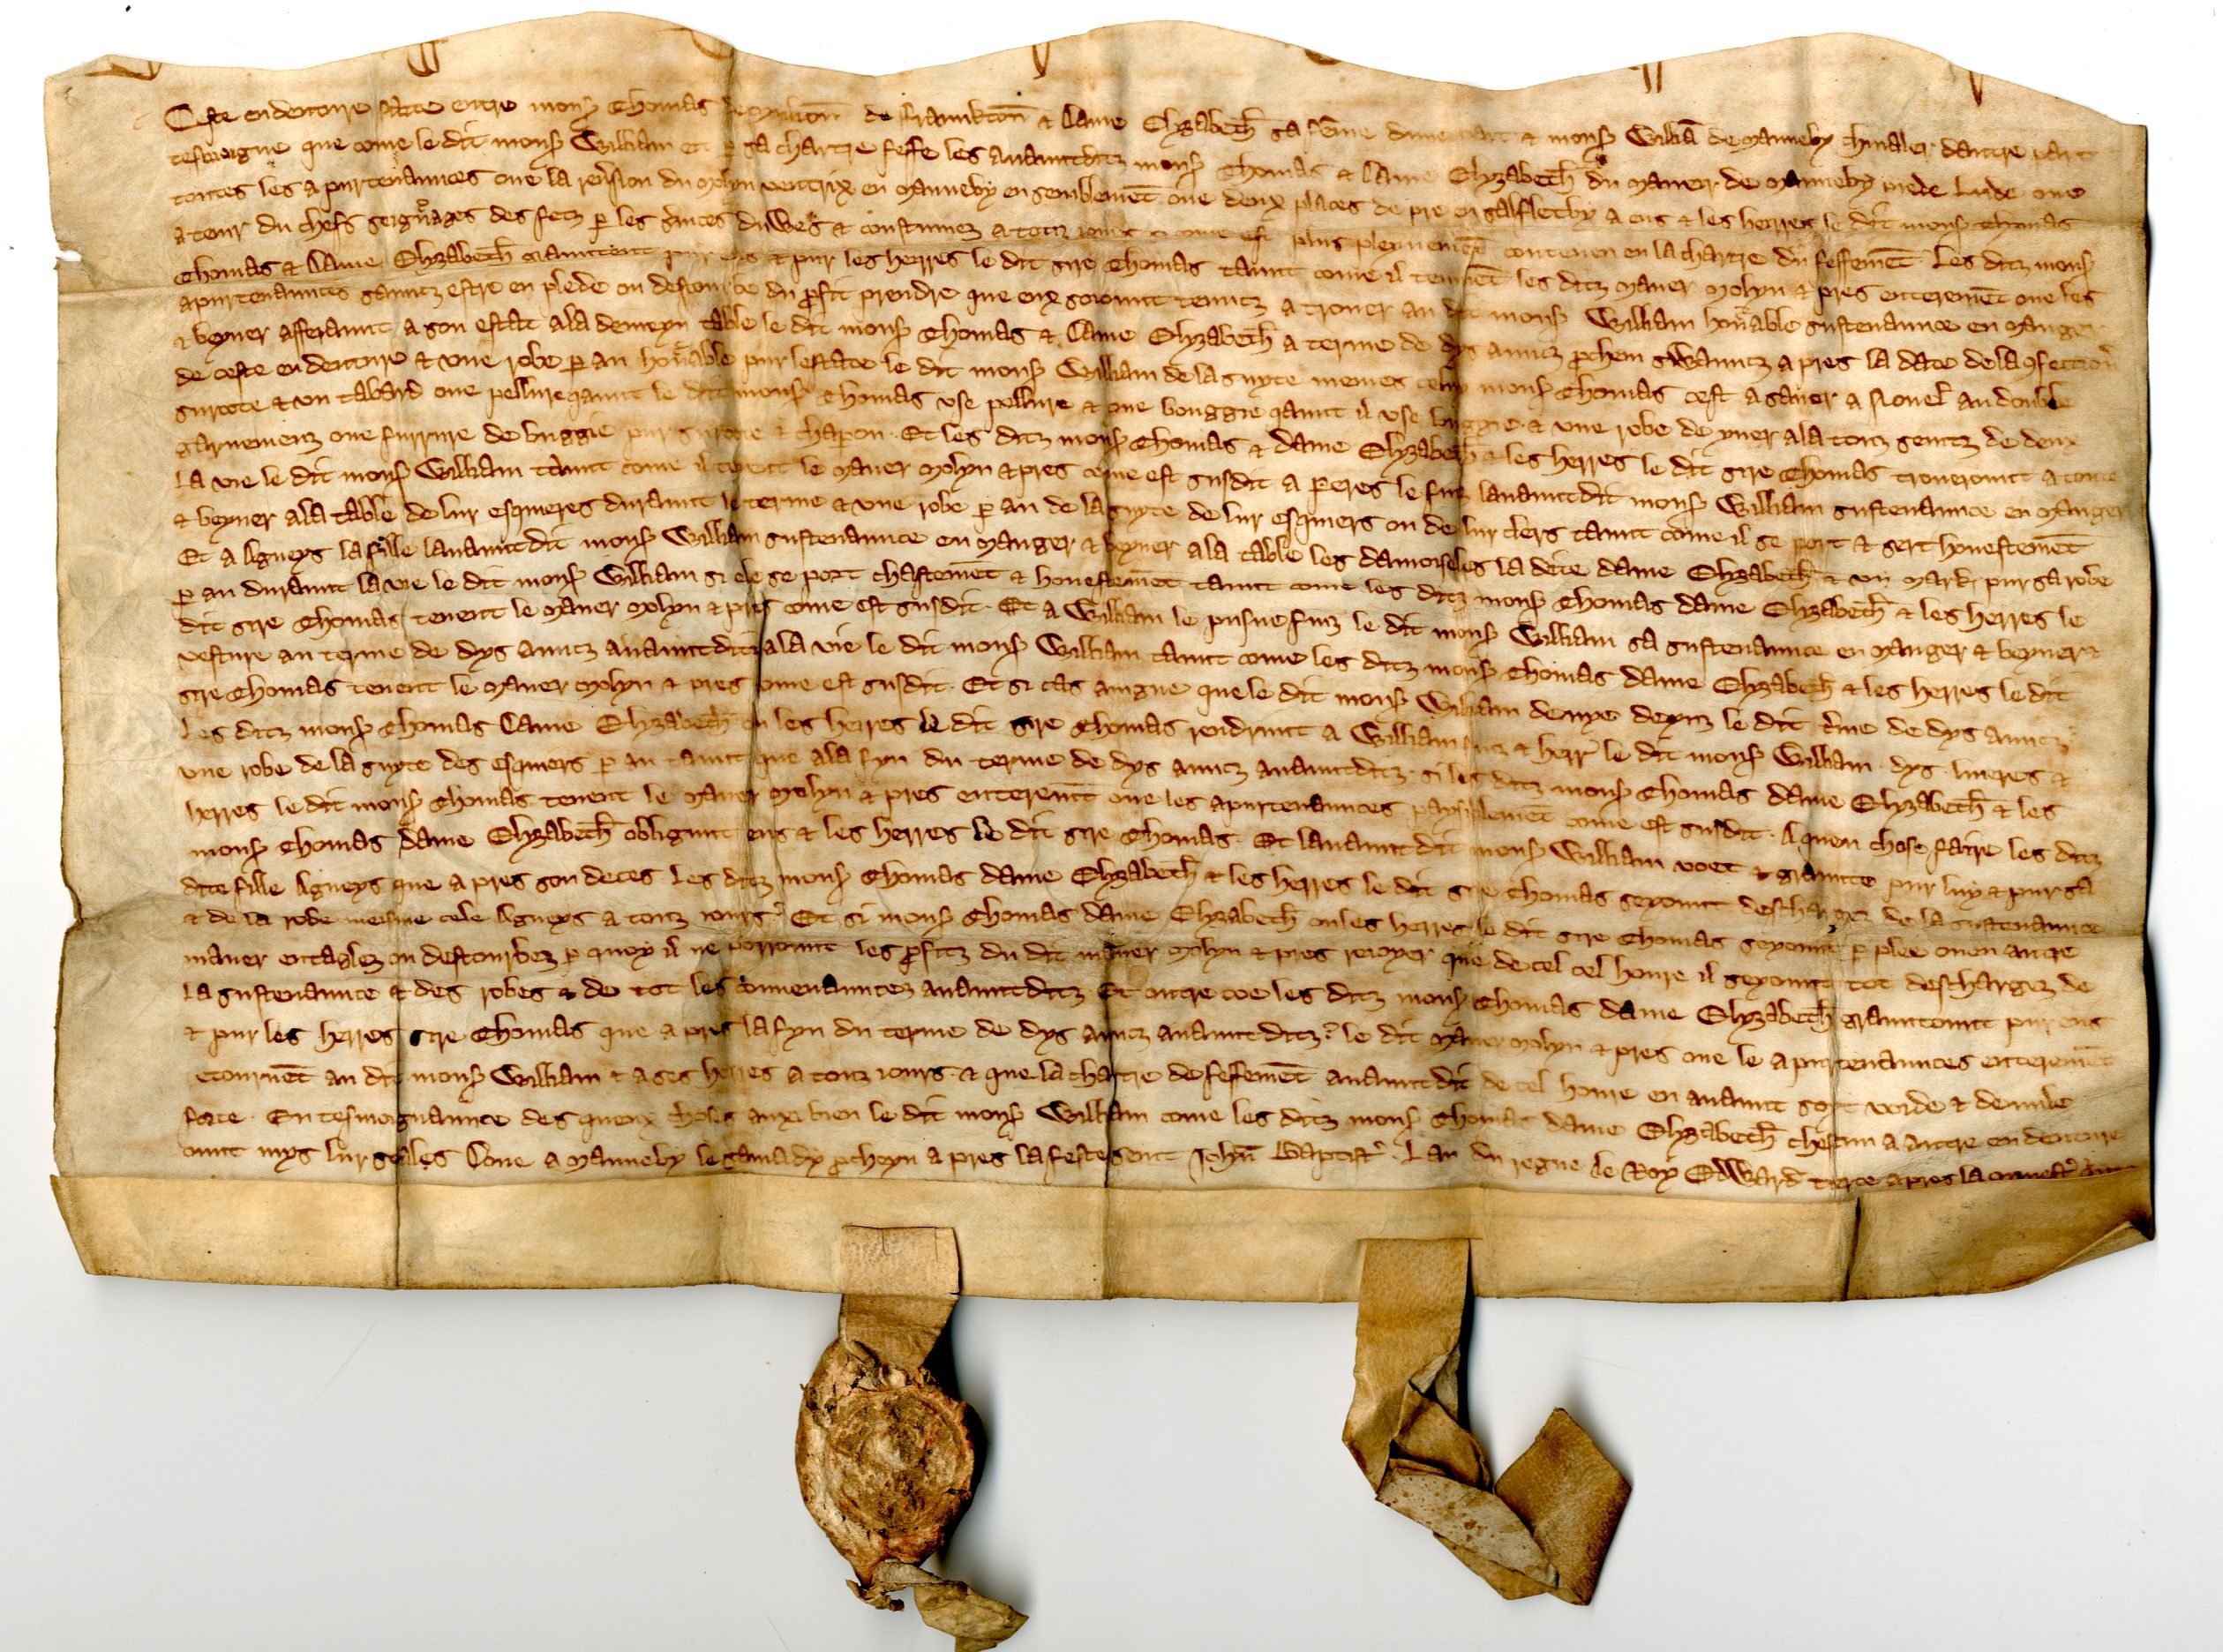 14th century indenture describing a Knight's livery